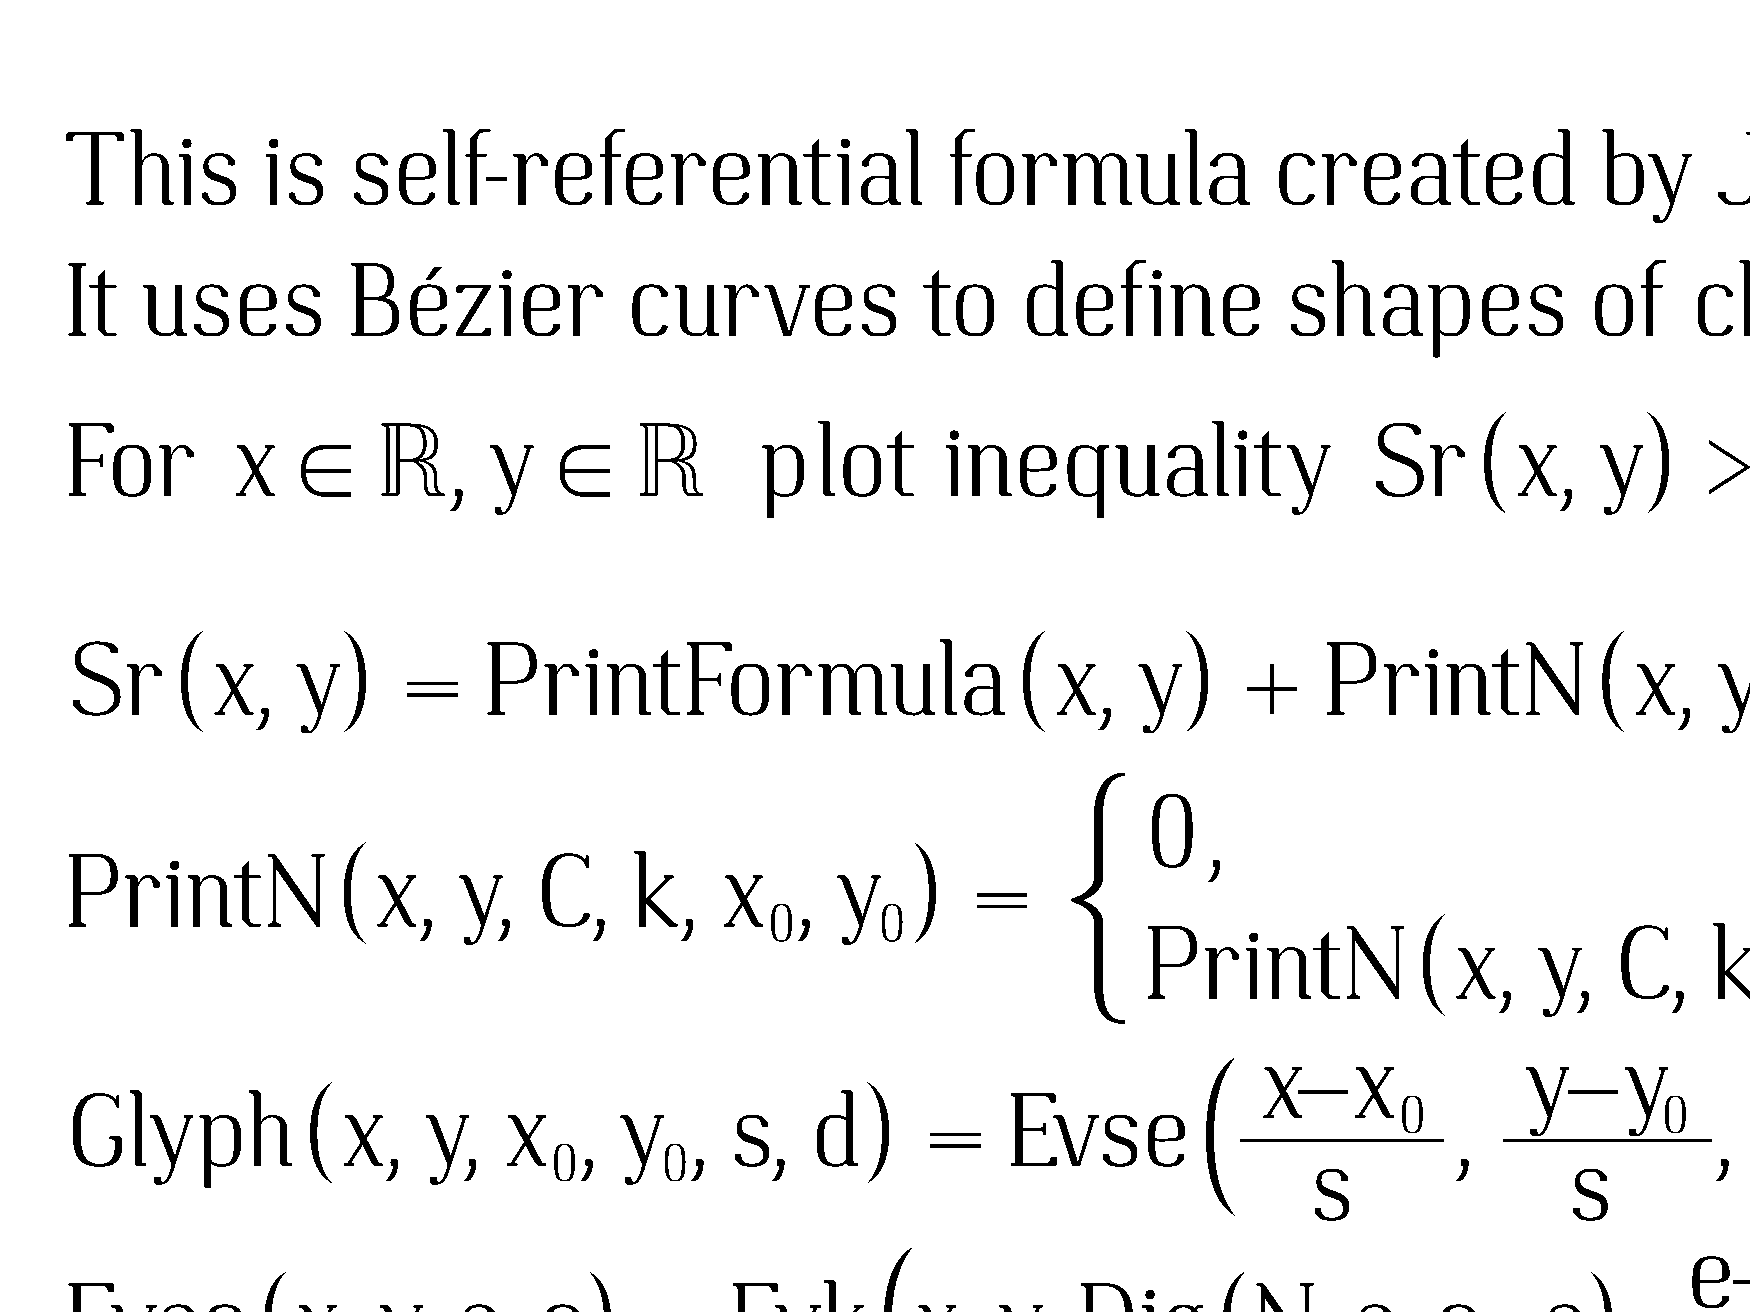 detail of self-referential formula